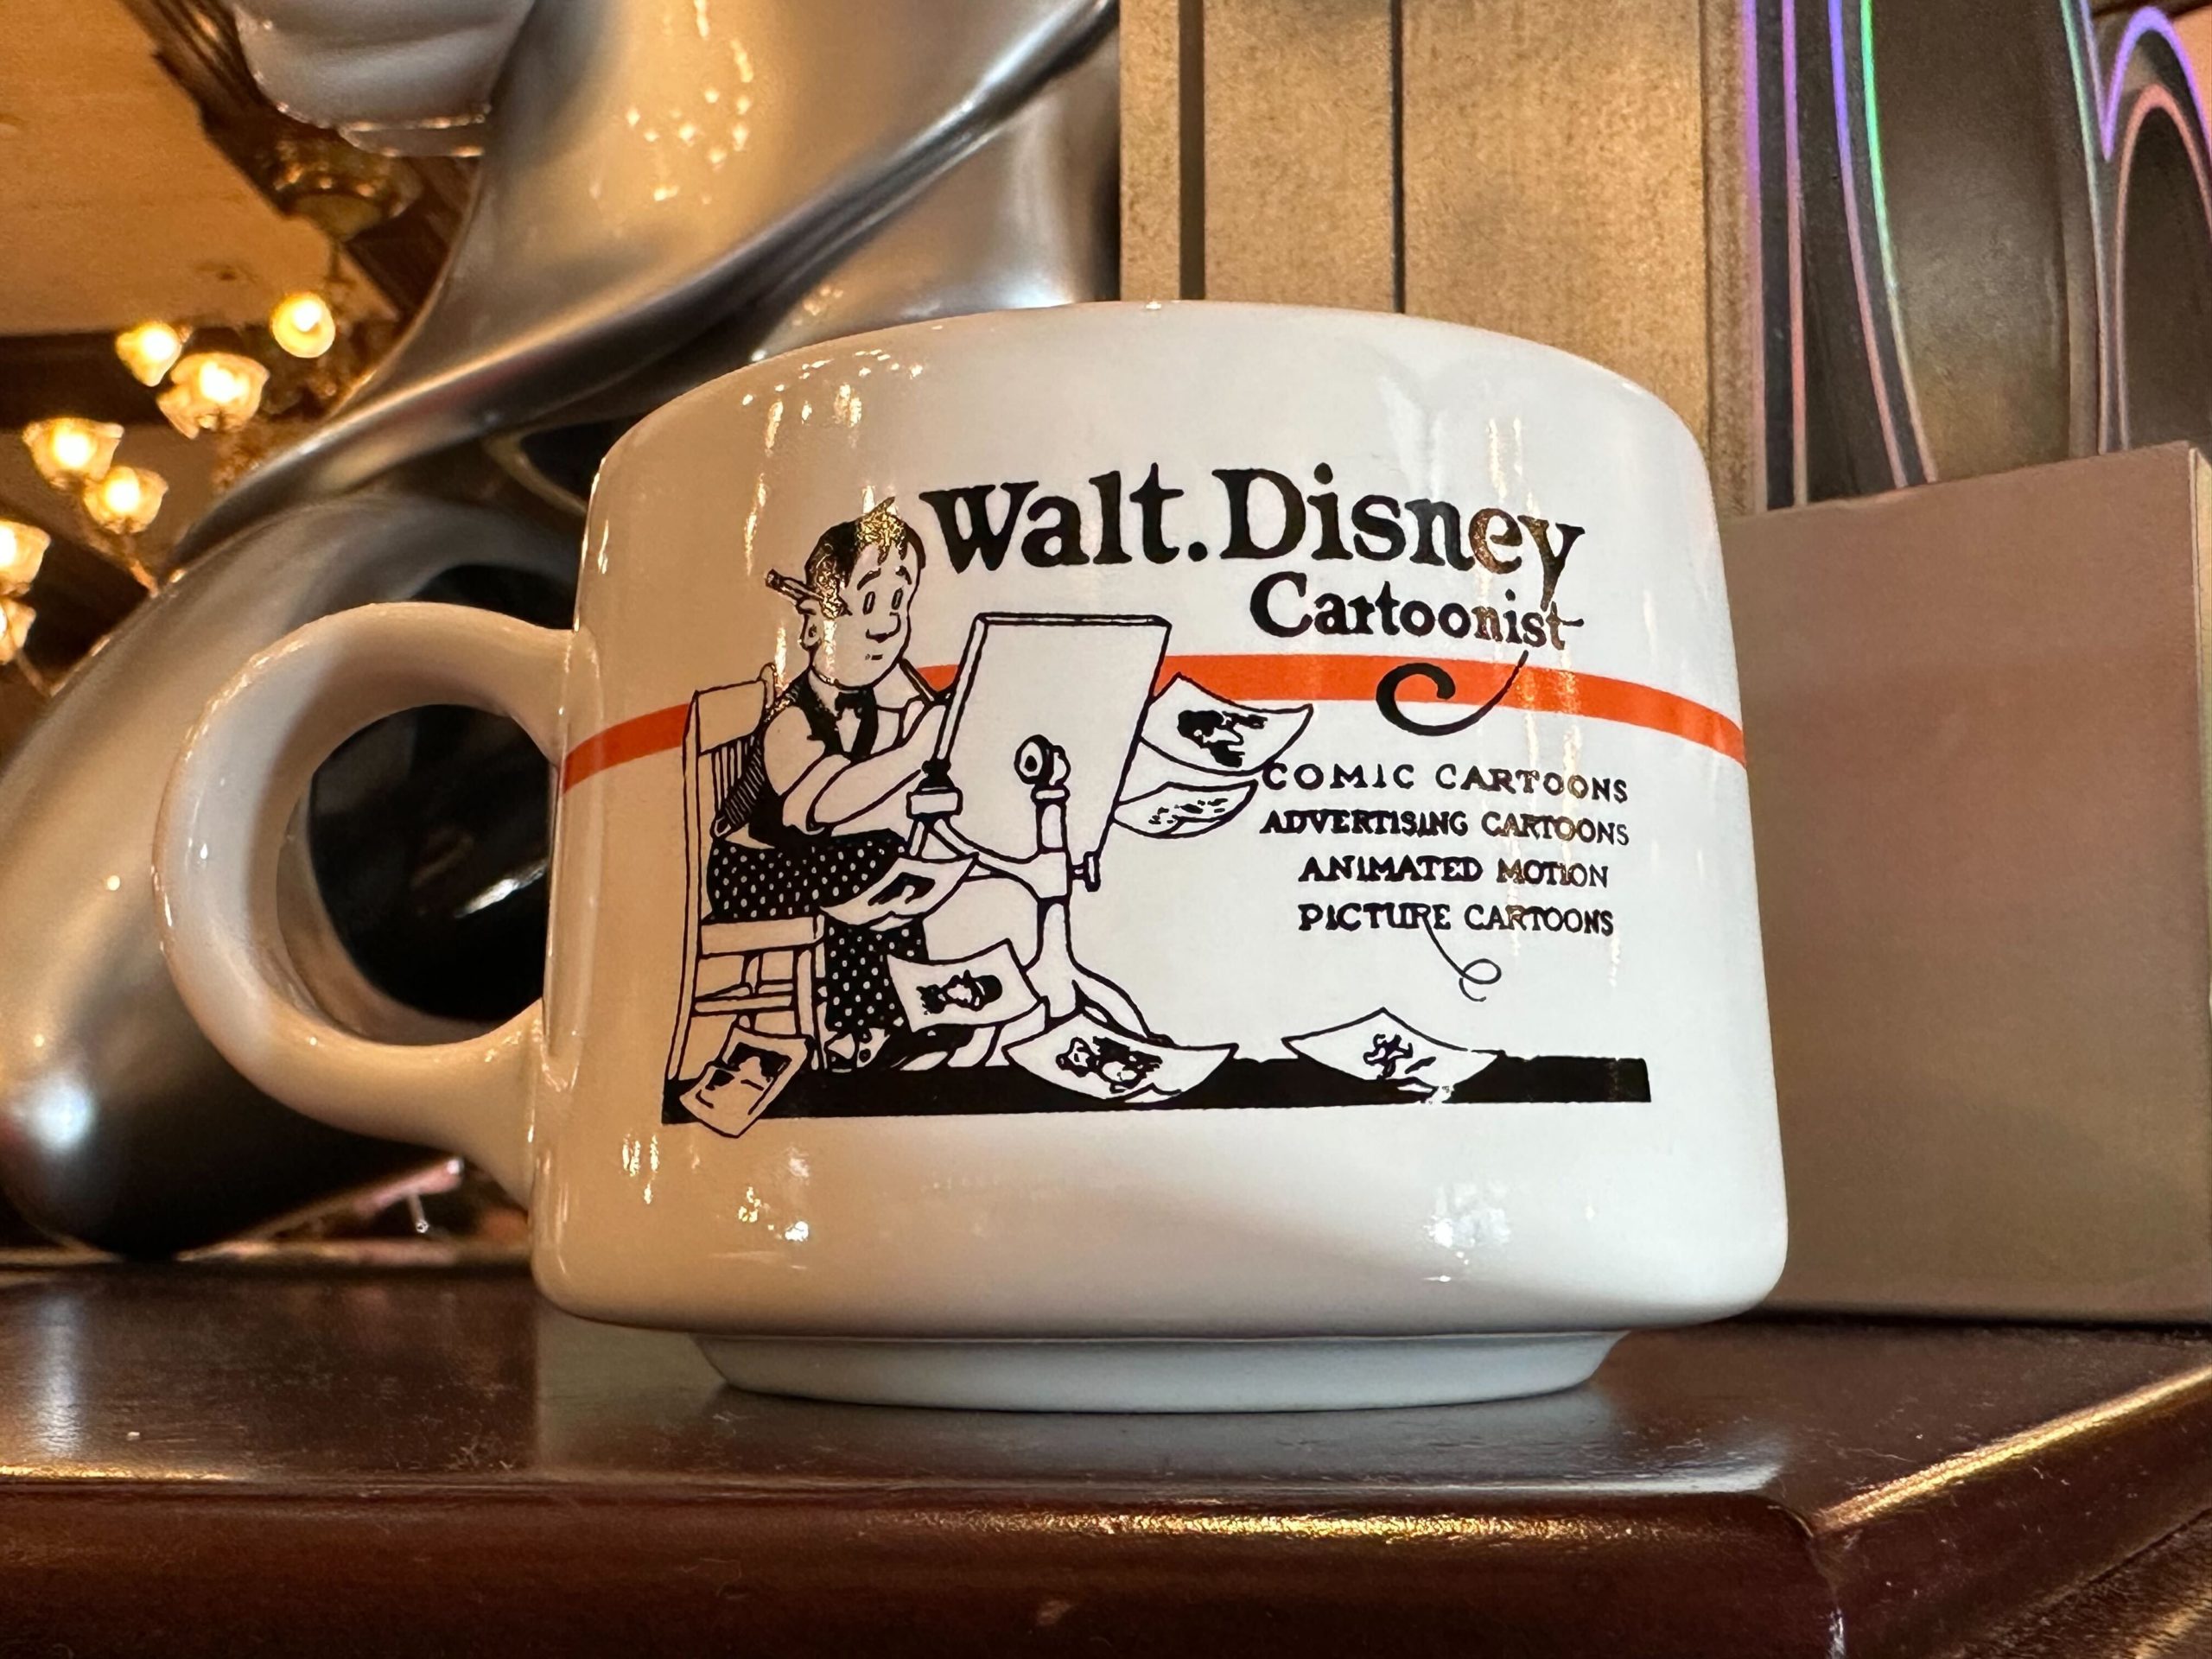 Walt Disney Cartoonist Mug – Disney100